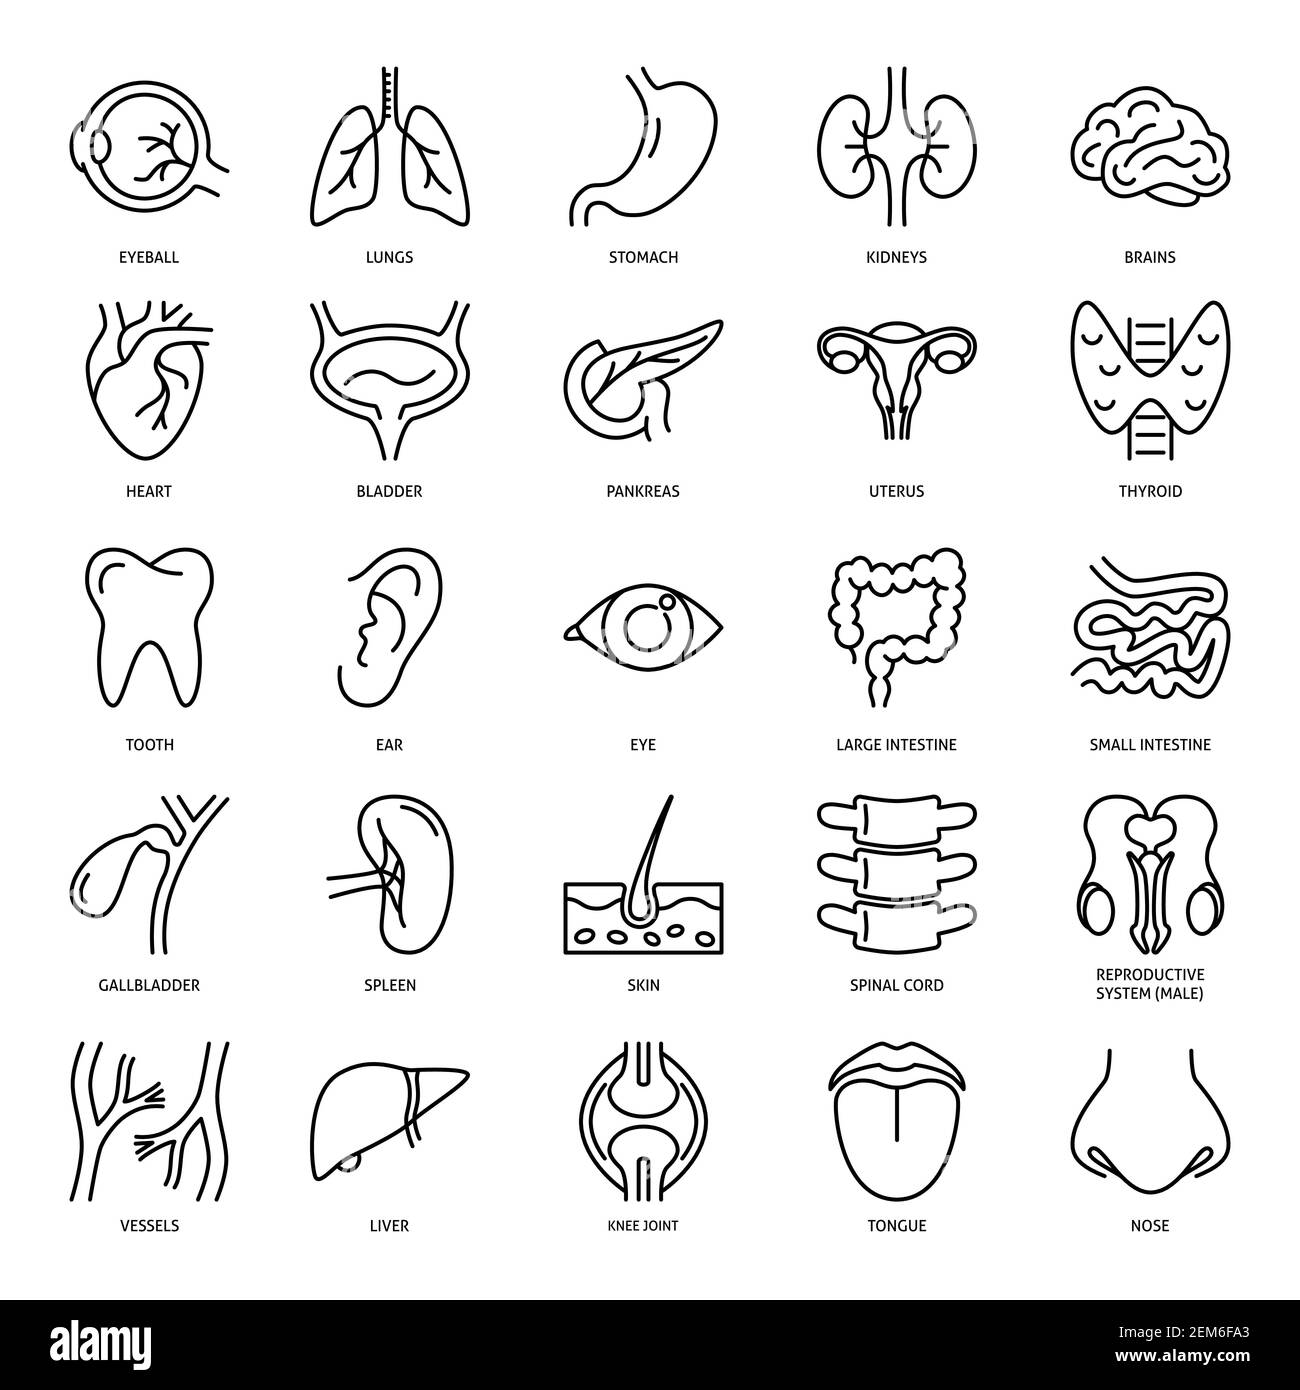 Human internal organs icon set in line style. Medical anatomy symbols ...